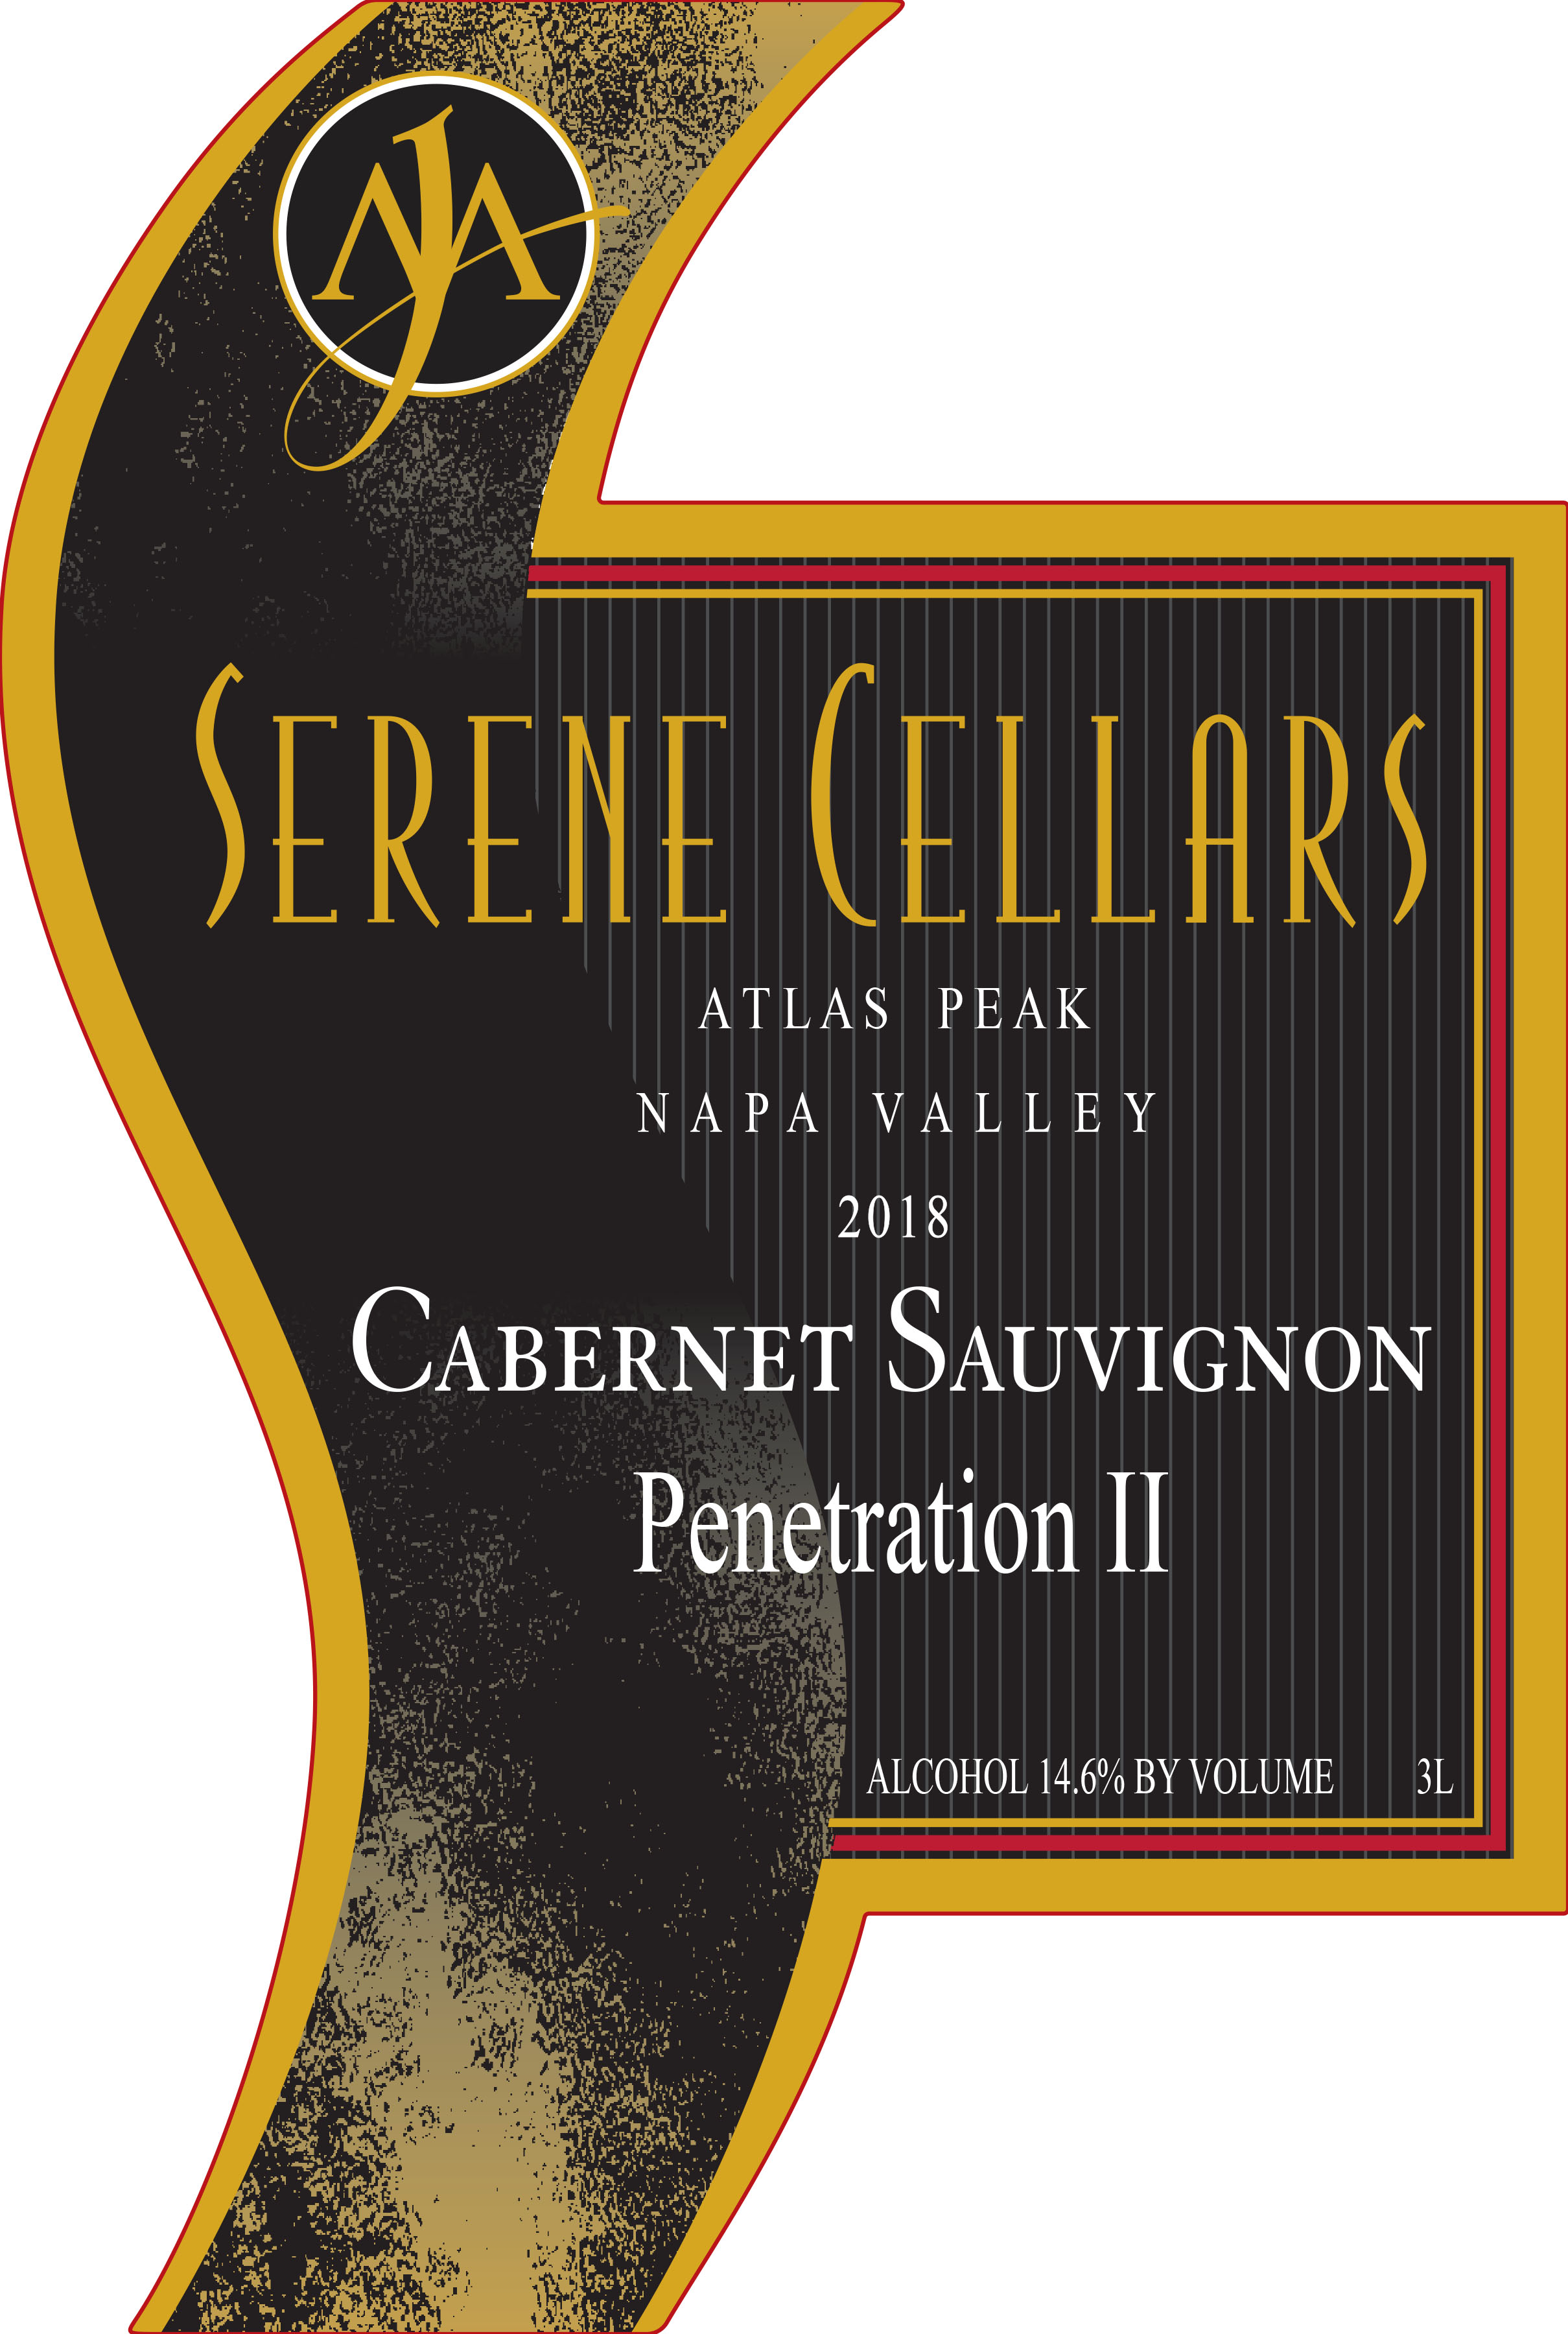 Product Image for 2018 Atlas Peak Cabernet Sauvignon "Penetration II" 3L